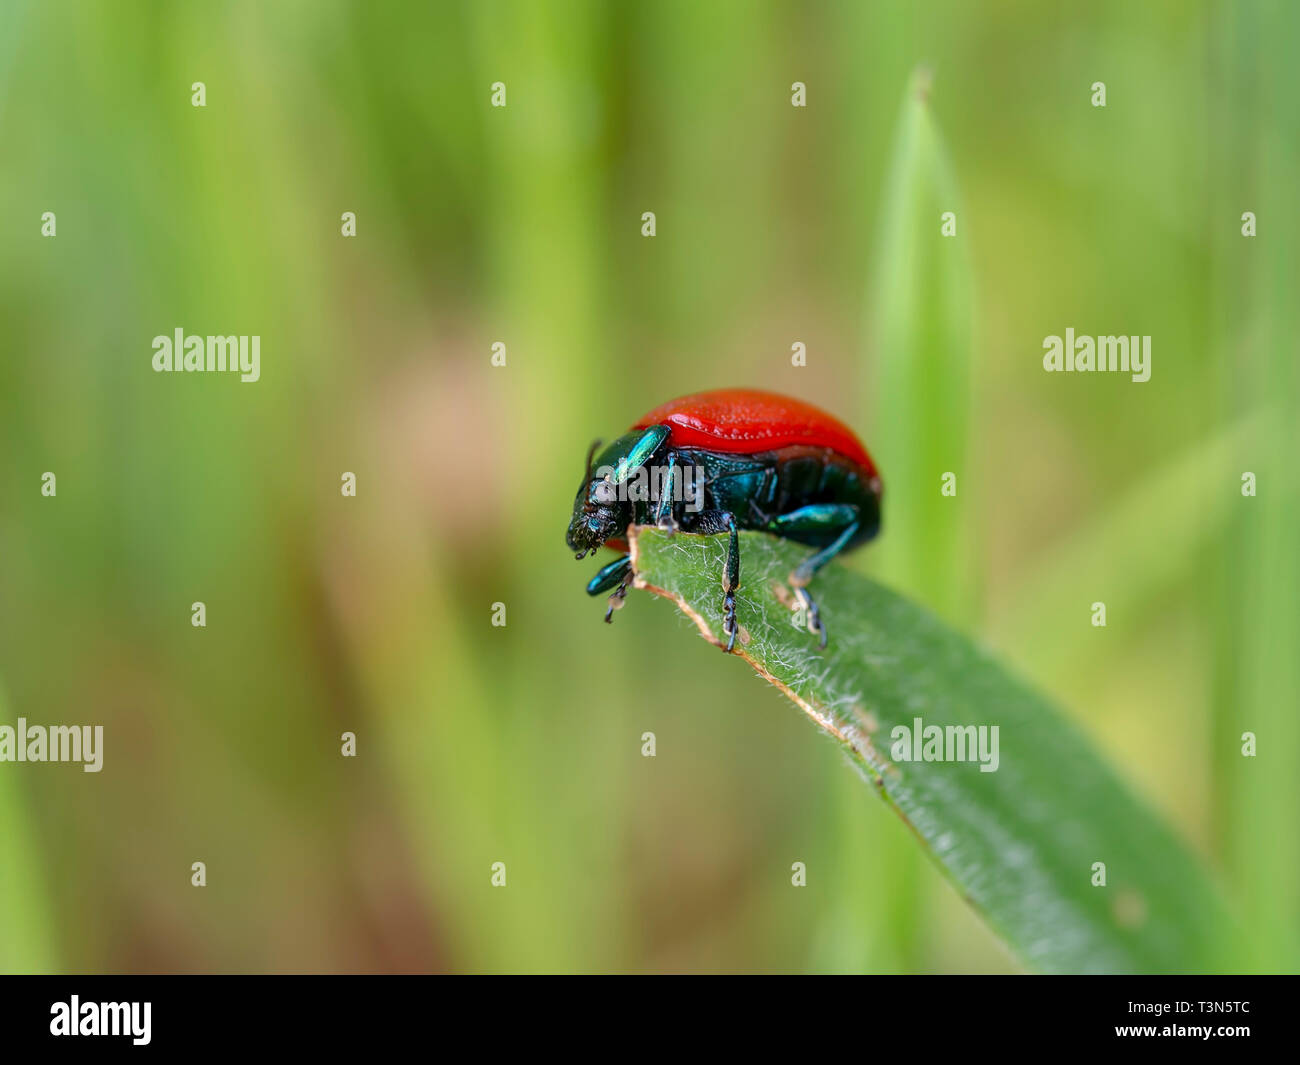 Chrysolina grossa, red leaf beetle, sull'erba. Verde cangiante e rosso brillante. Close up. Foto Stock